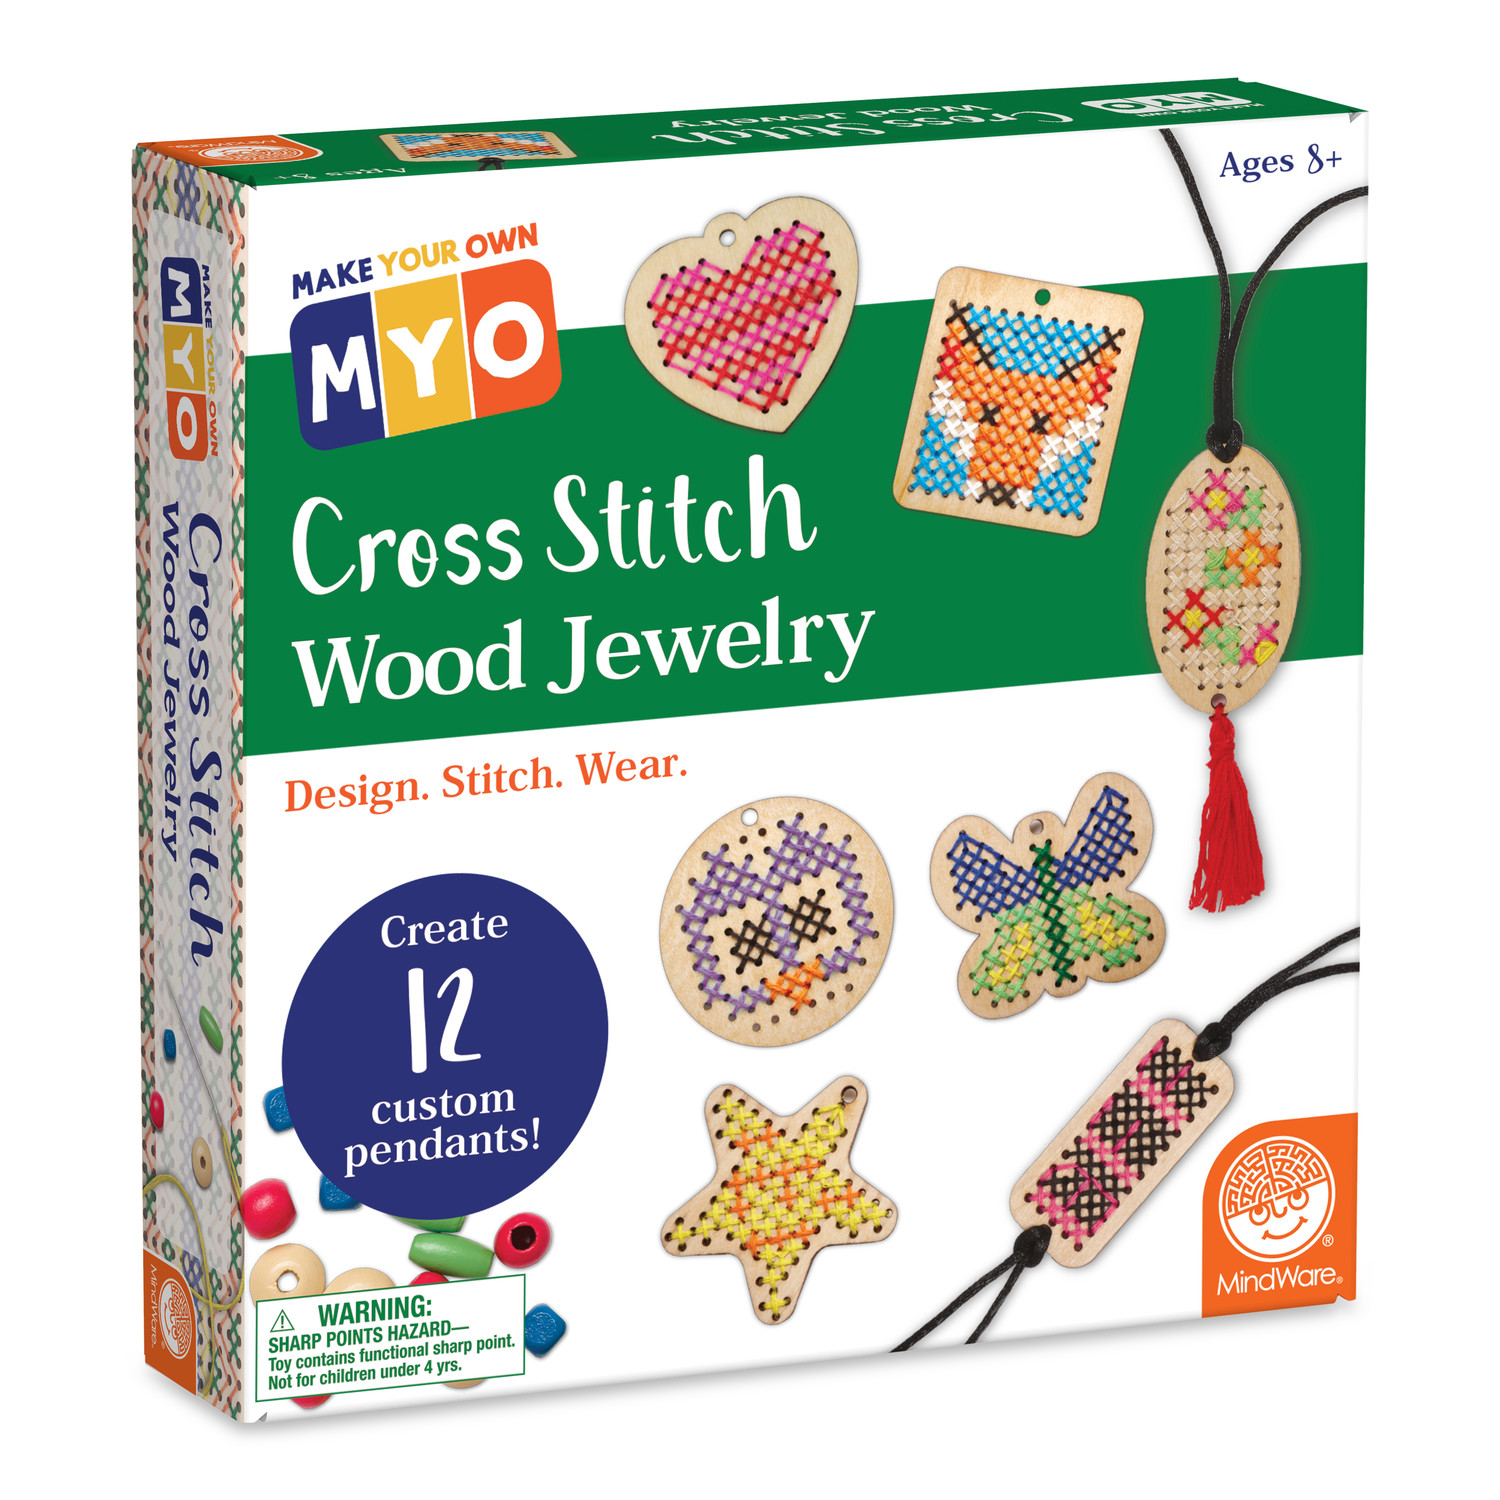 Make Your Own Cross Stitch Wood Jewelry